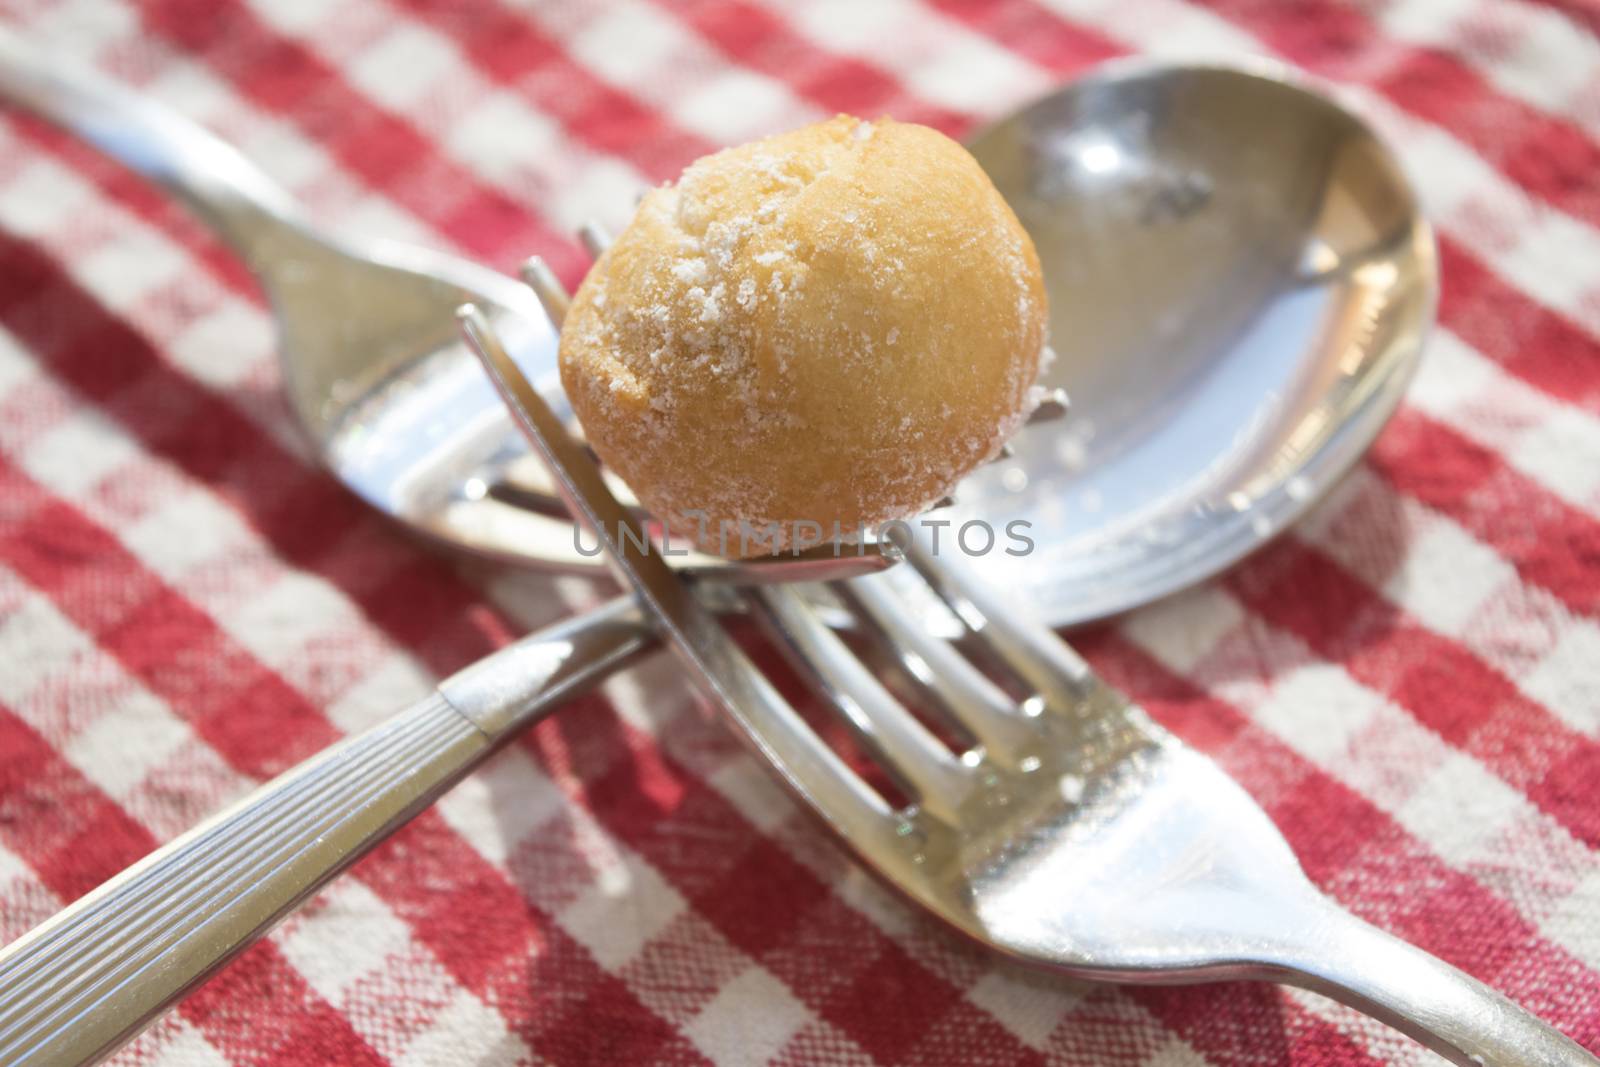 castagnole or strufoli a traditiona italian dessert made at Carnival